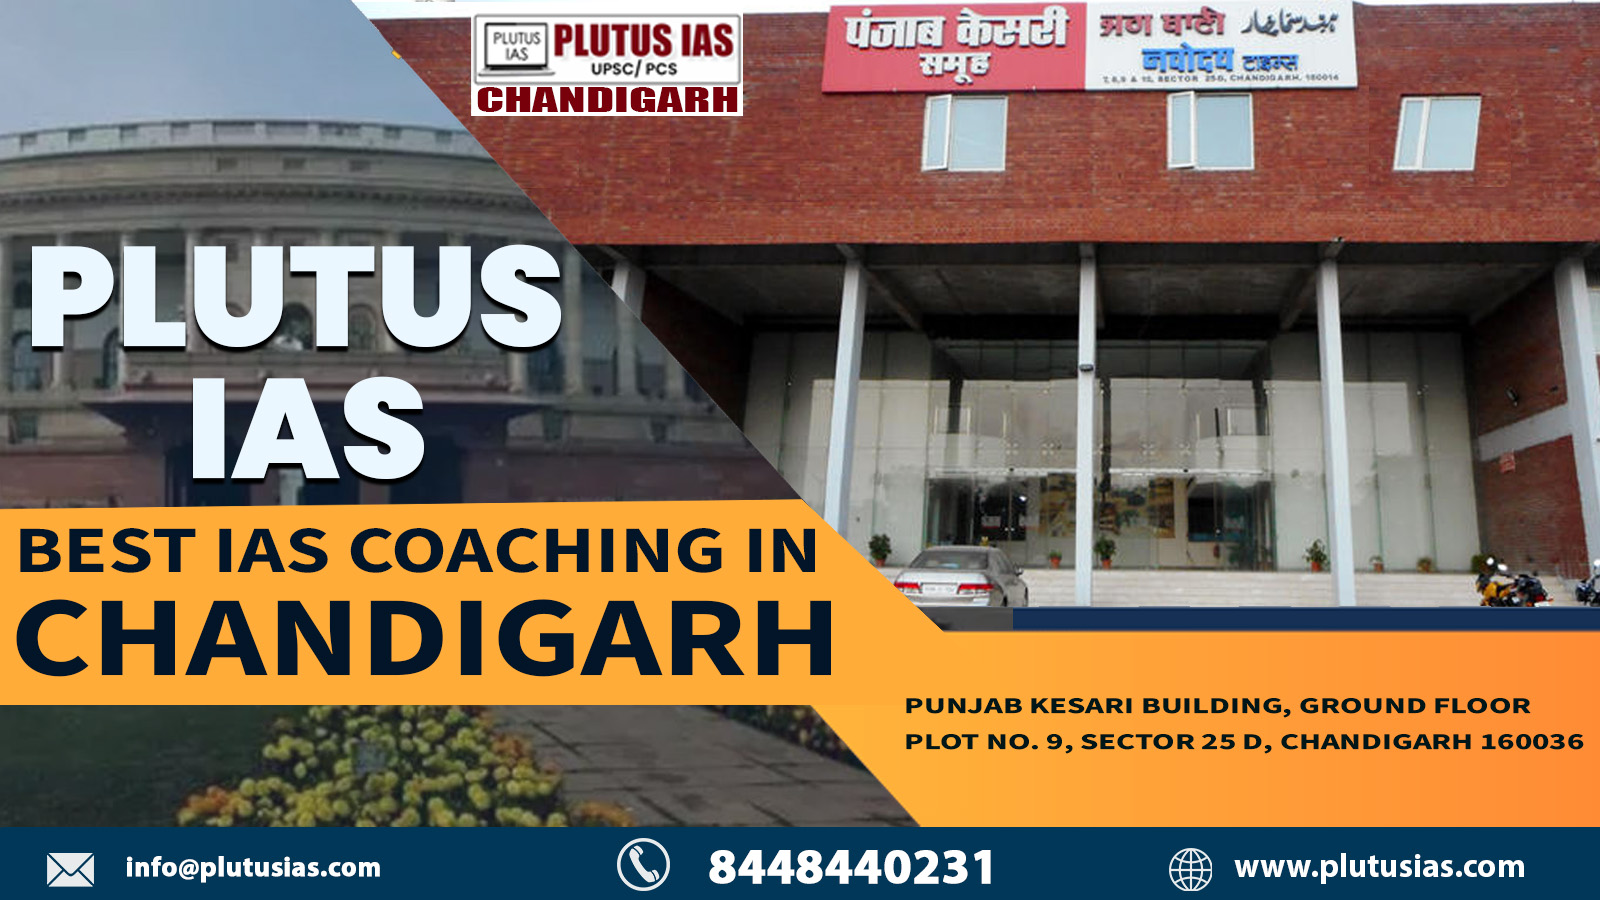 Plutus IAS | Best IAS Coaching in Chandigarh